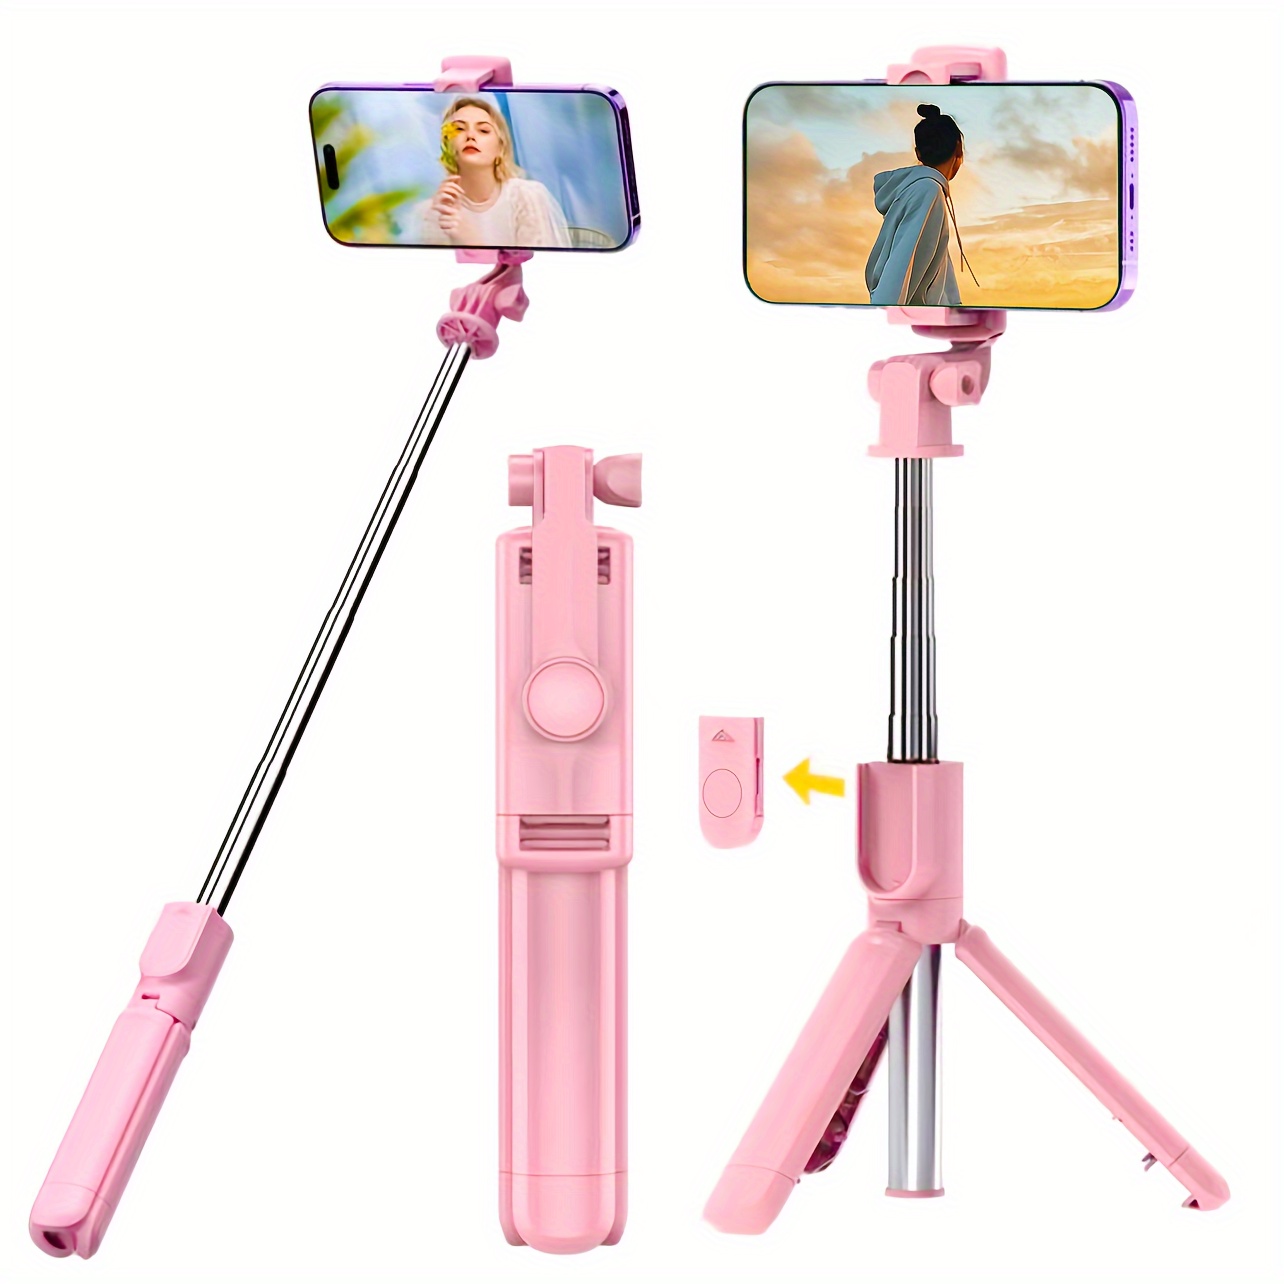 Xiaomi Mi Selfie Stick Tripod, palo selfie para smartphones, trípode para  teléfonos móviles, control remoto, 3